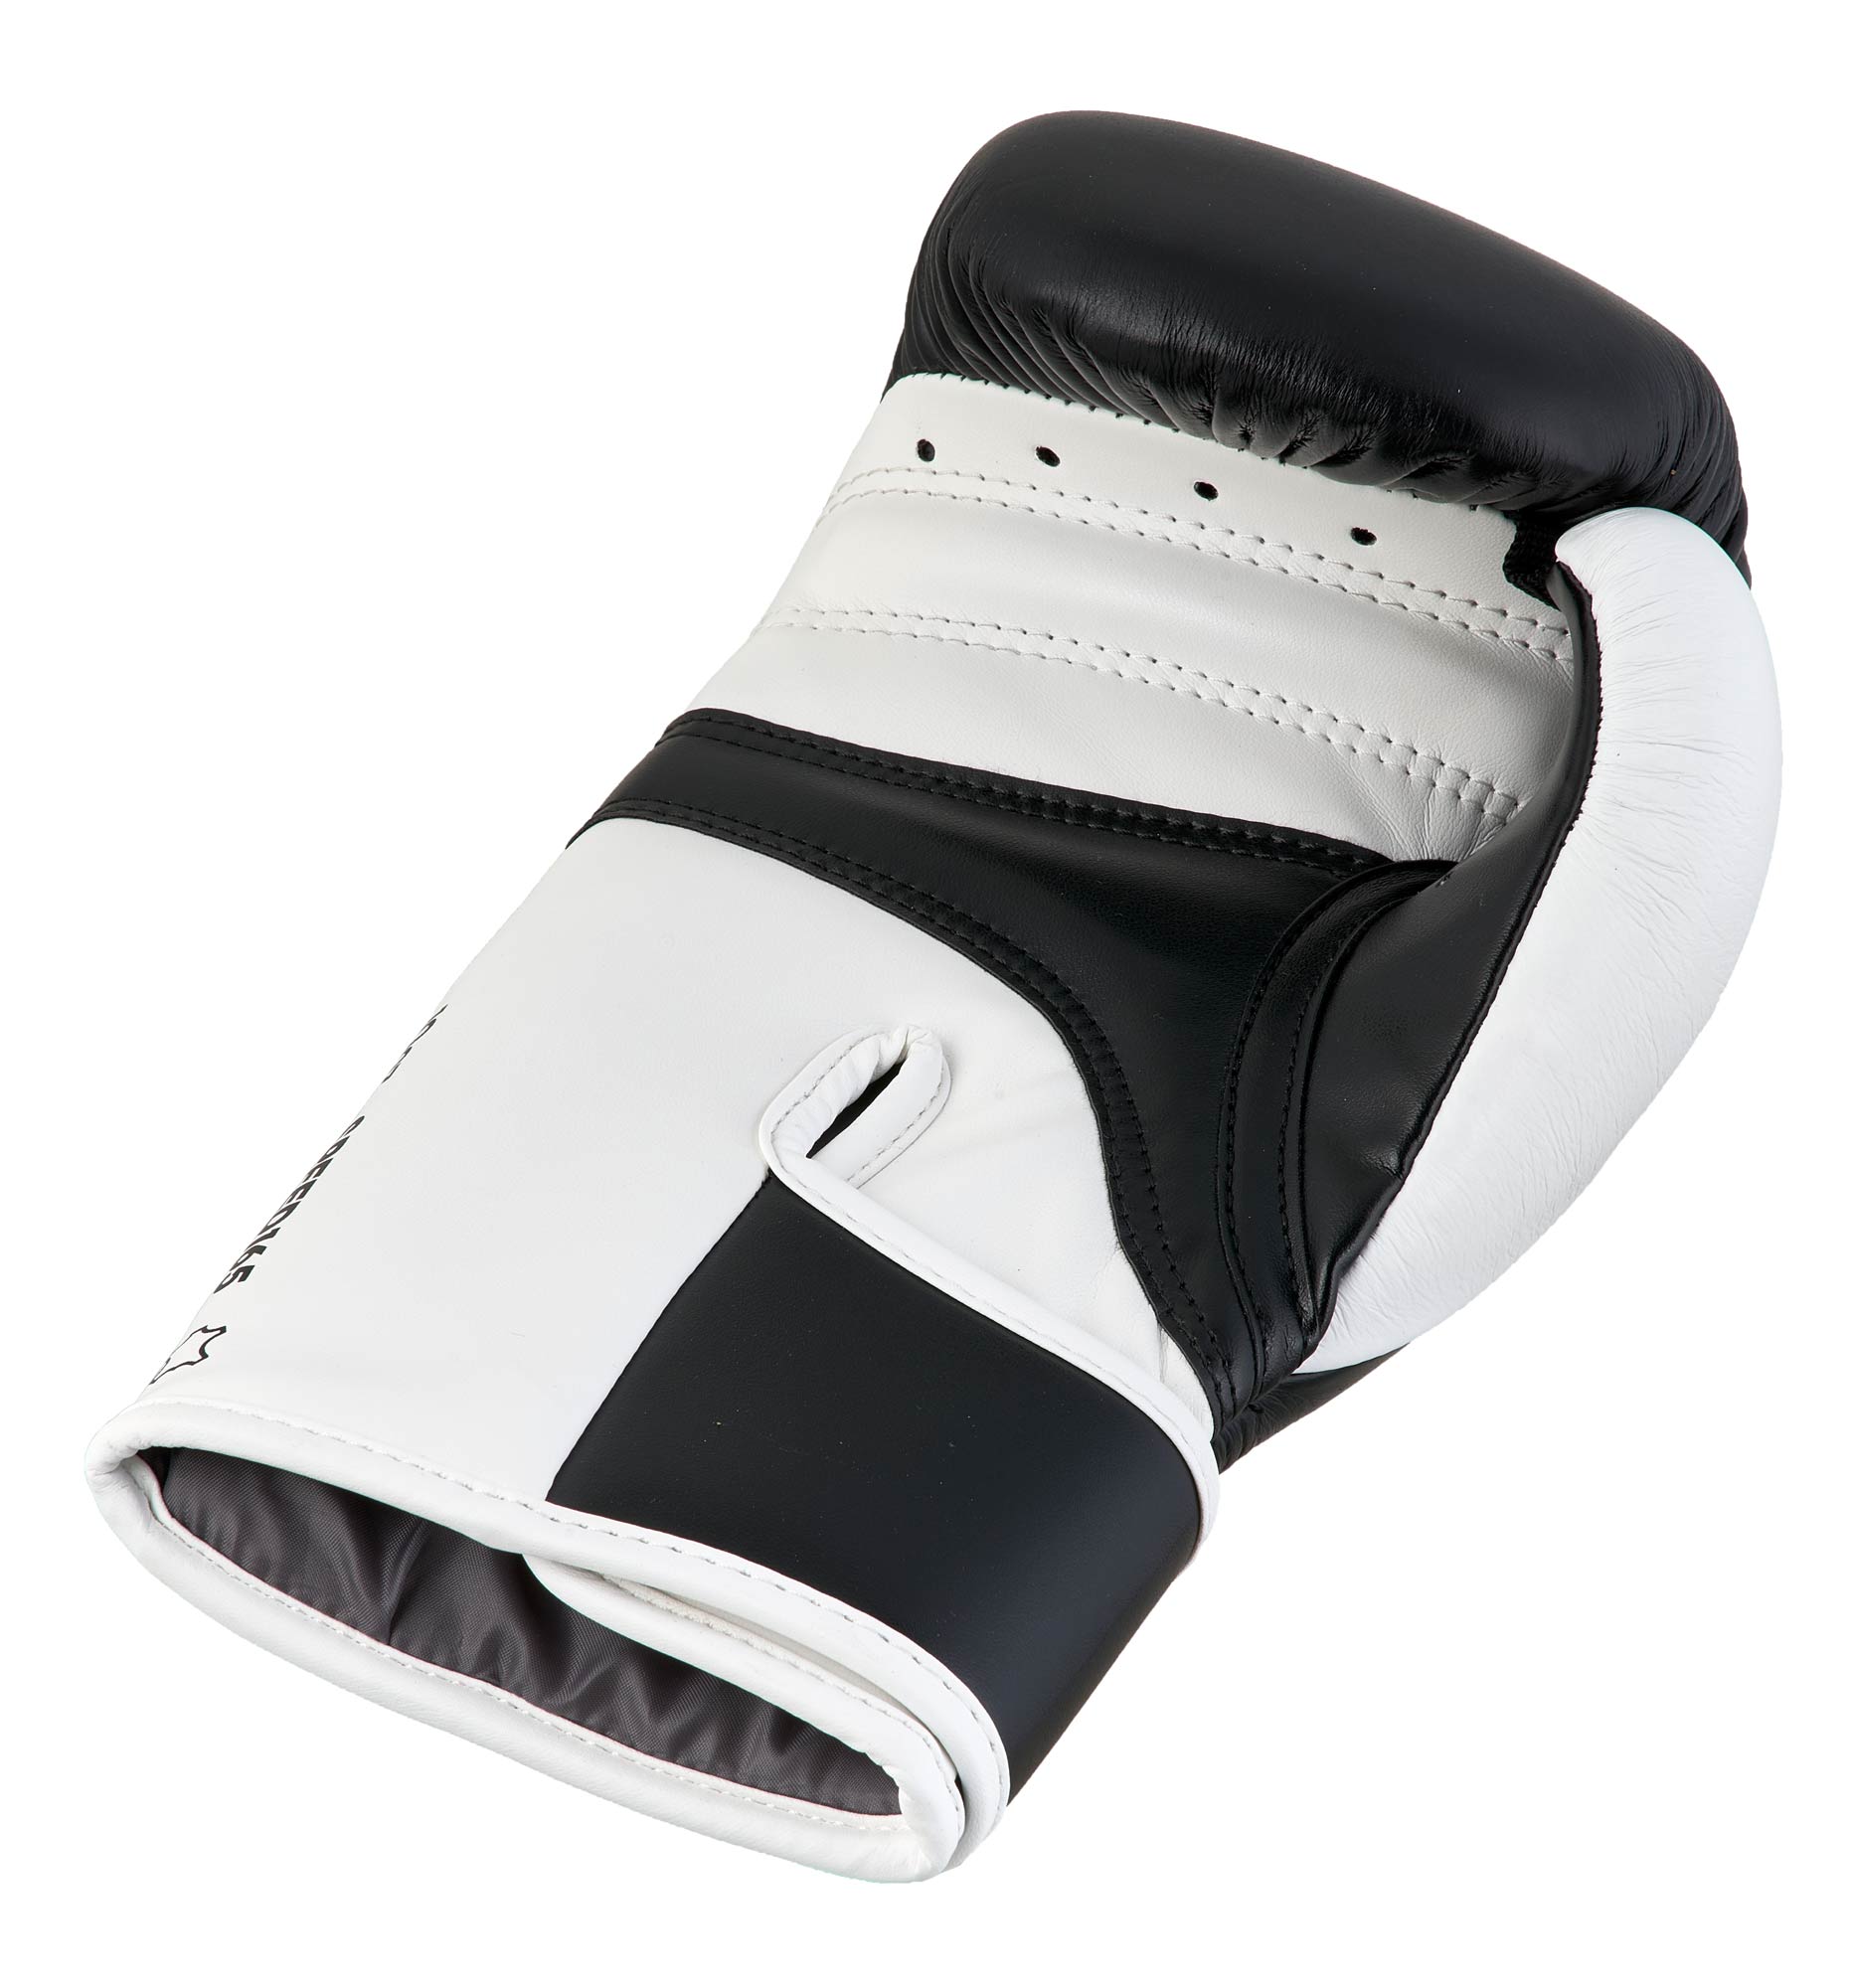 adidas competition glove Speed 165 adiSBG165, black/white